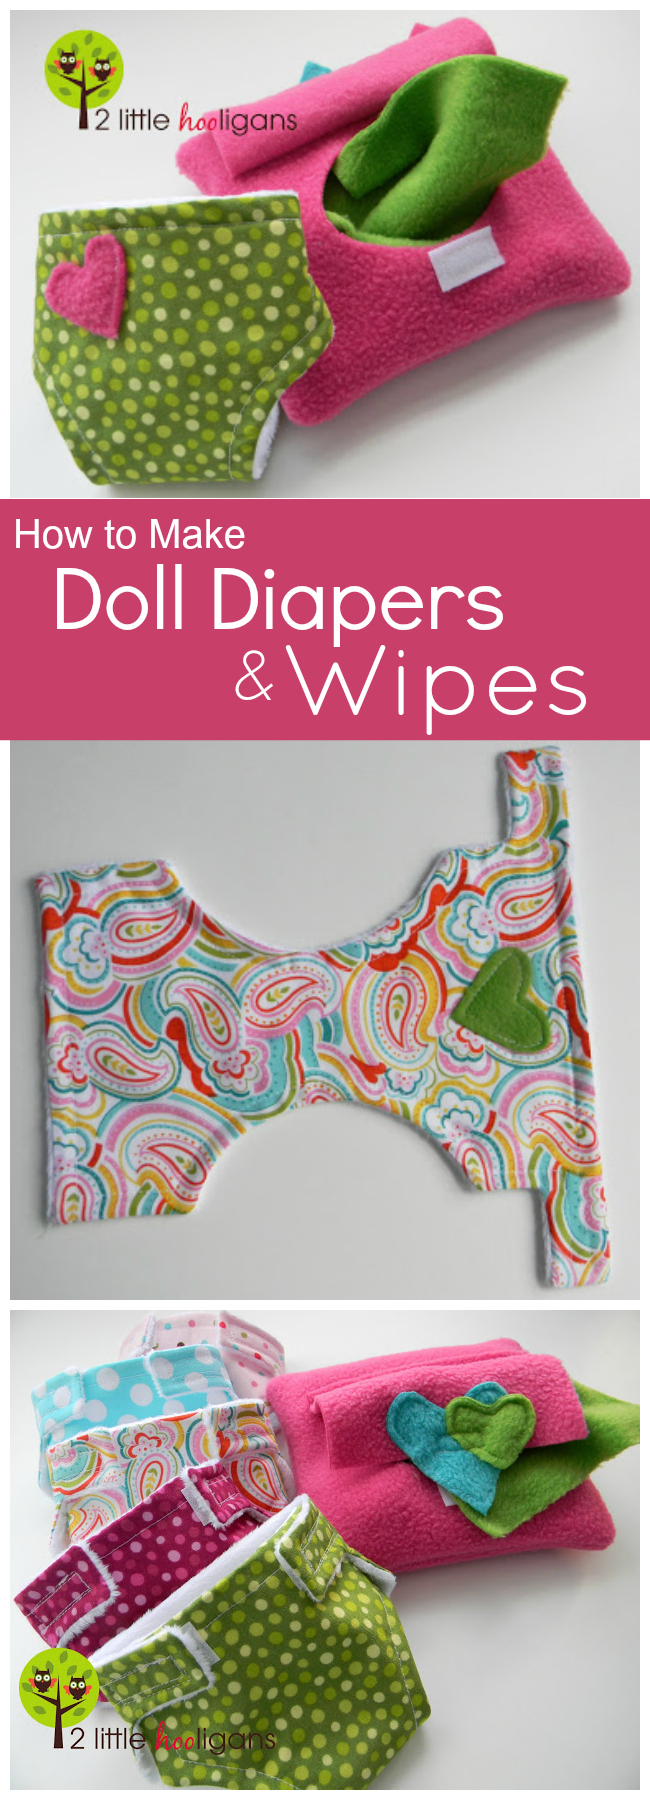 Dolly Diaper